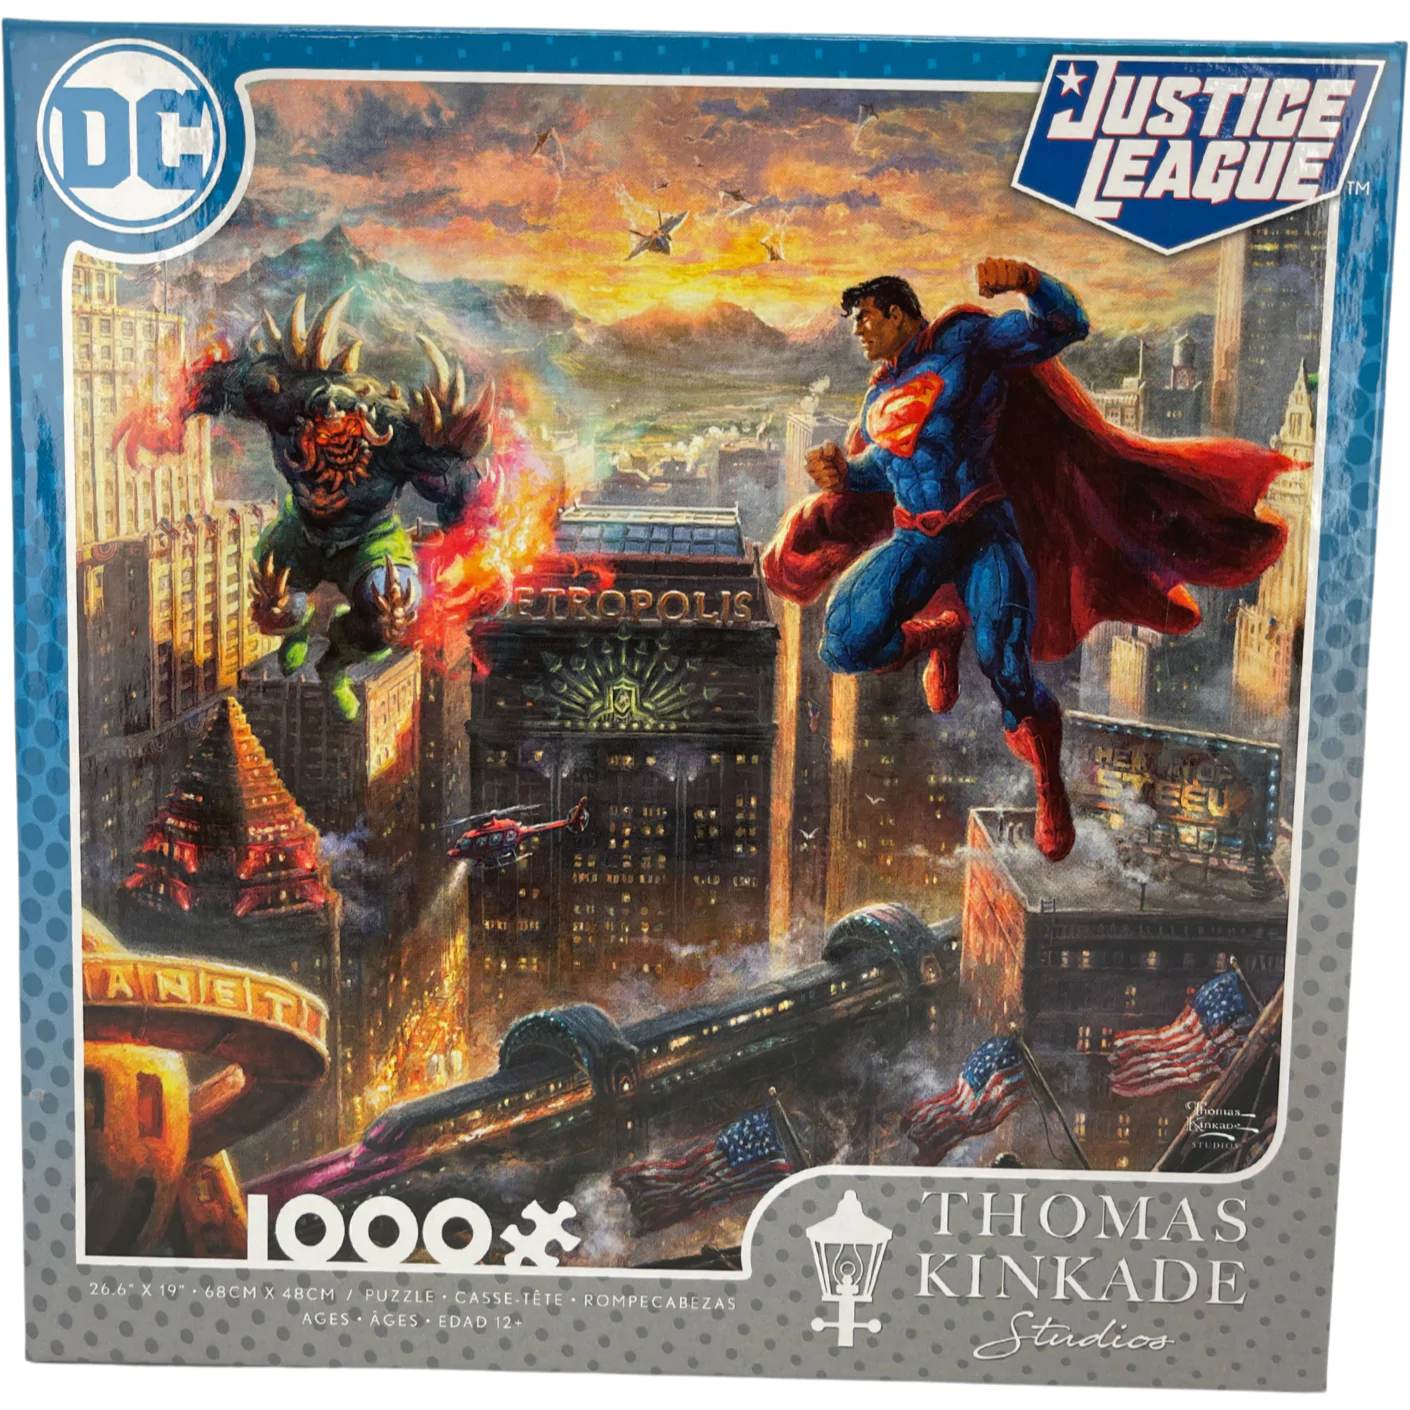 Thomas Kinkade Justice League Puzzle / 1000 Piece / Superman / 26.6" x 19"